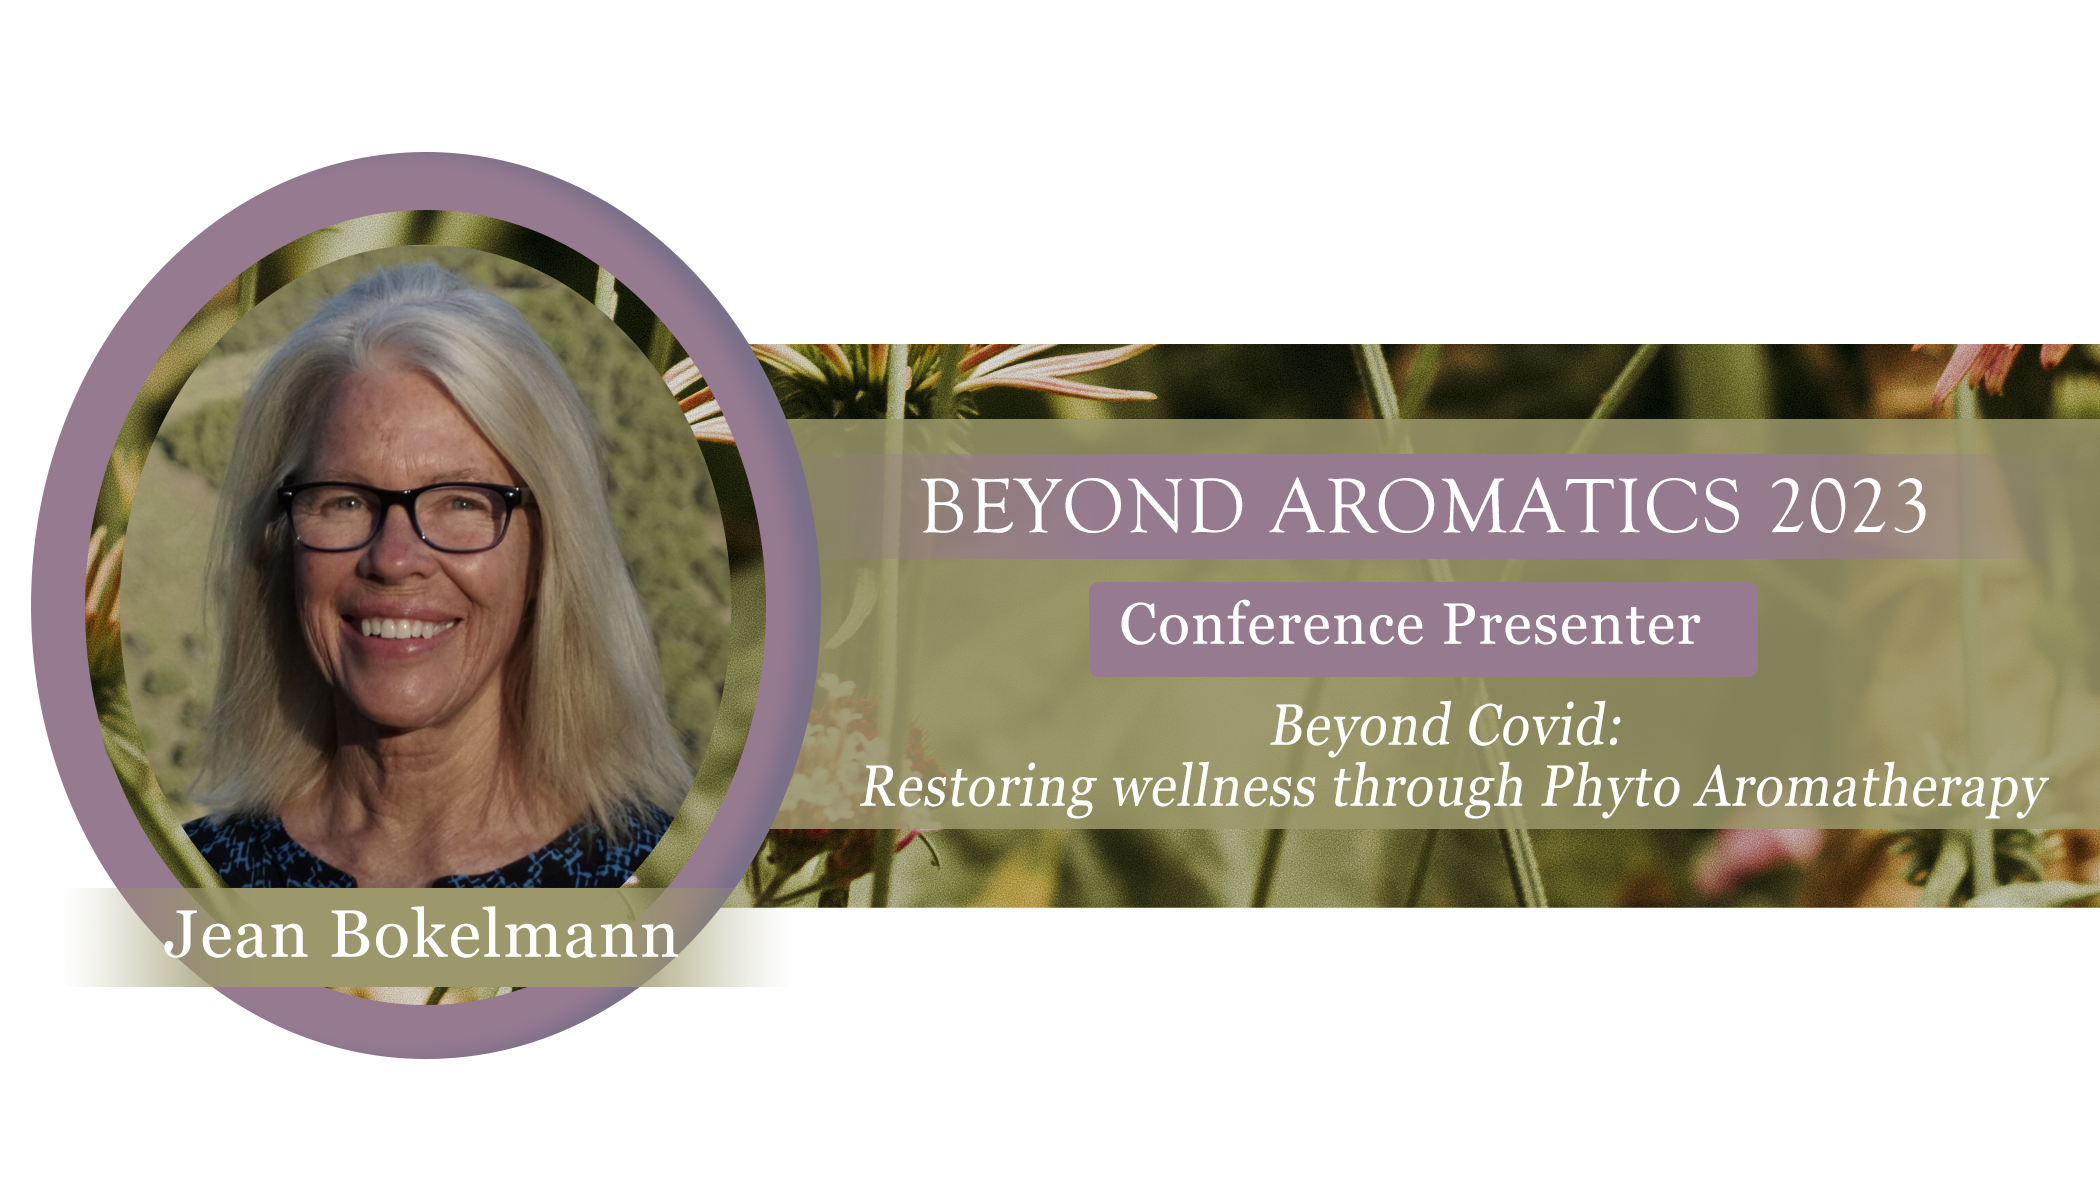 Beyond Covid: Restoring wellness through Phyto Aromatherapy